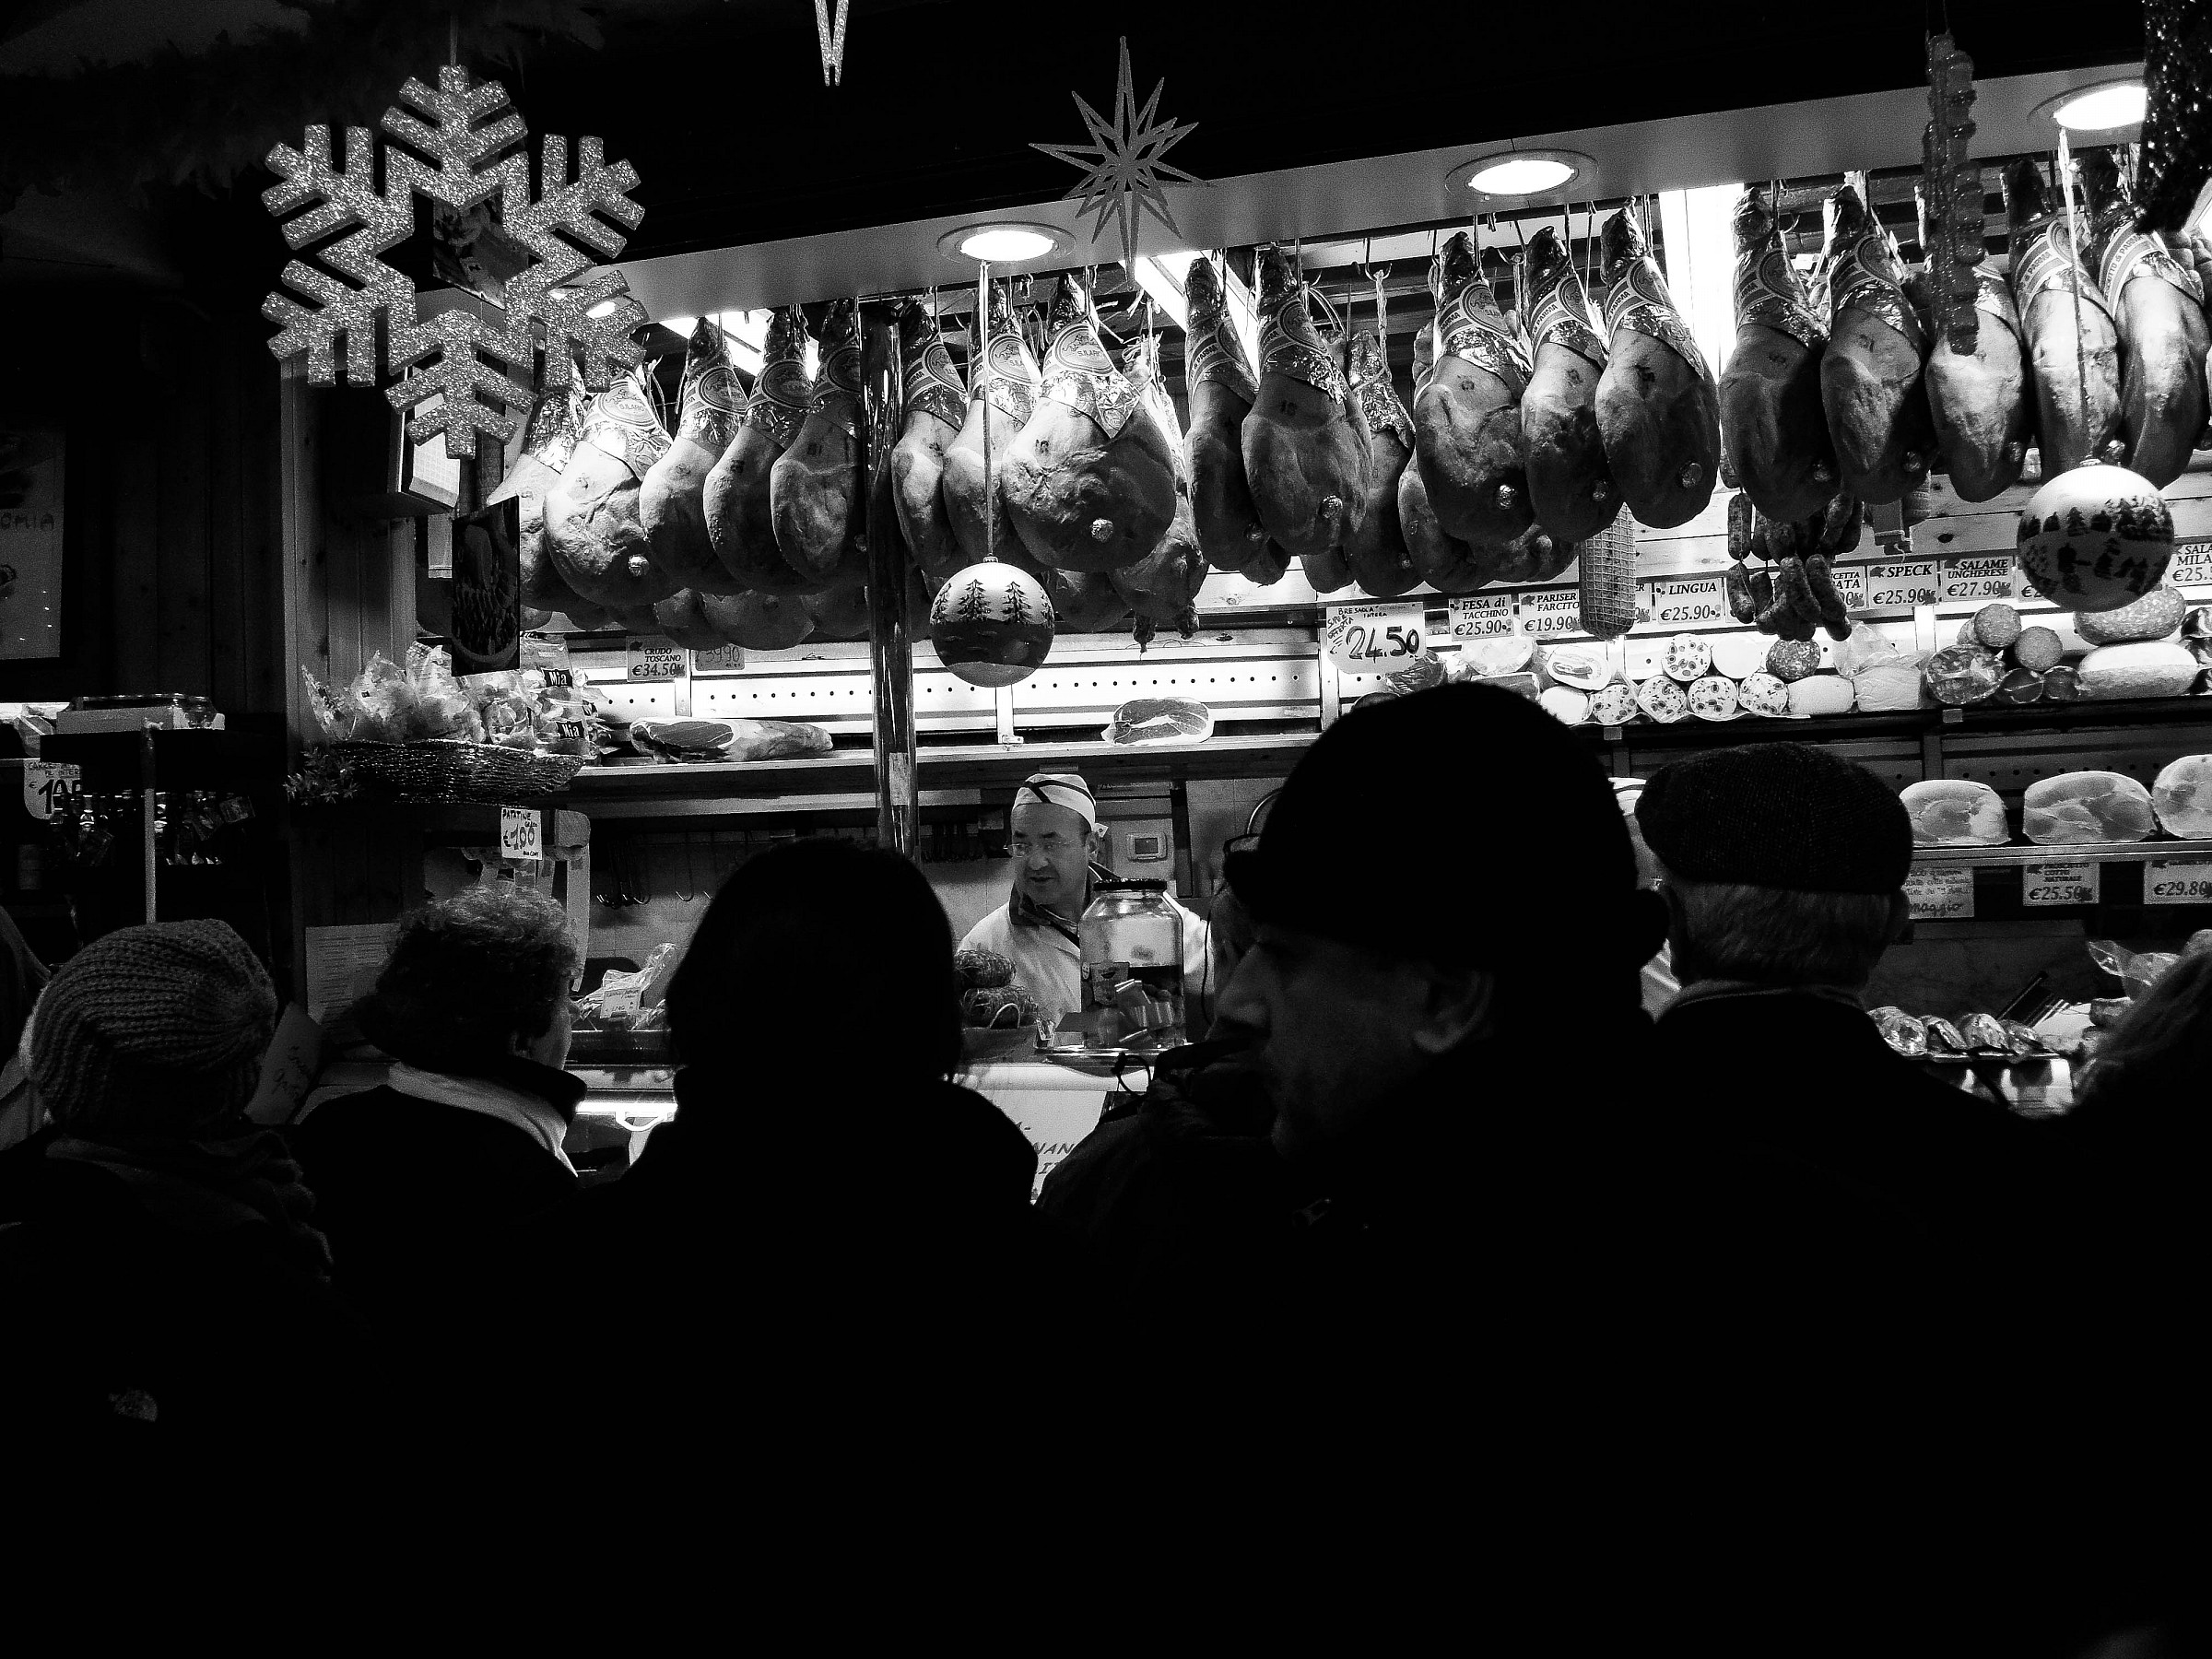 The Seller of Ham...